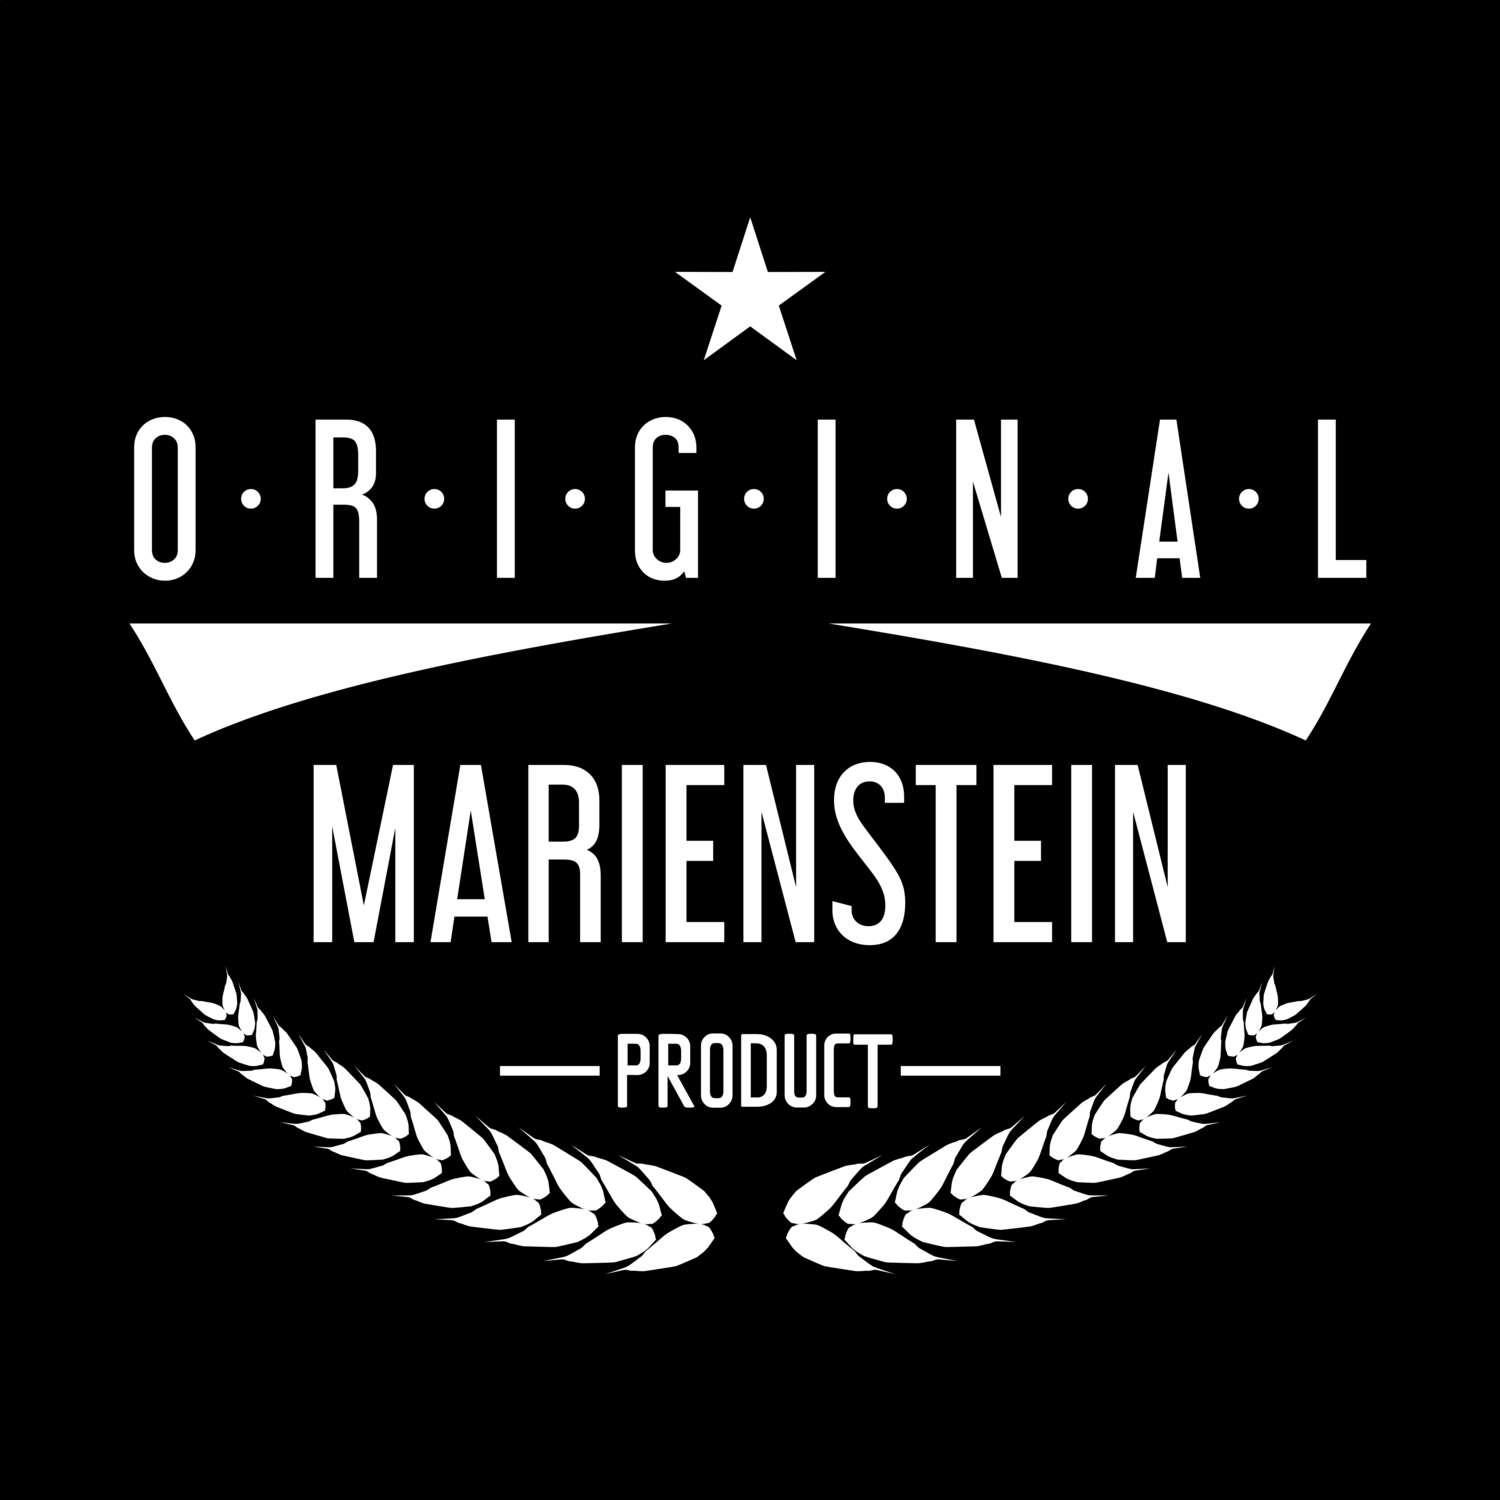 Marienstein T-Shirt »Original Product«